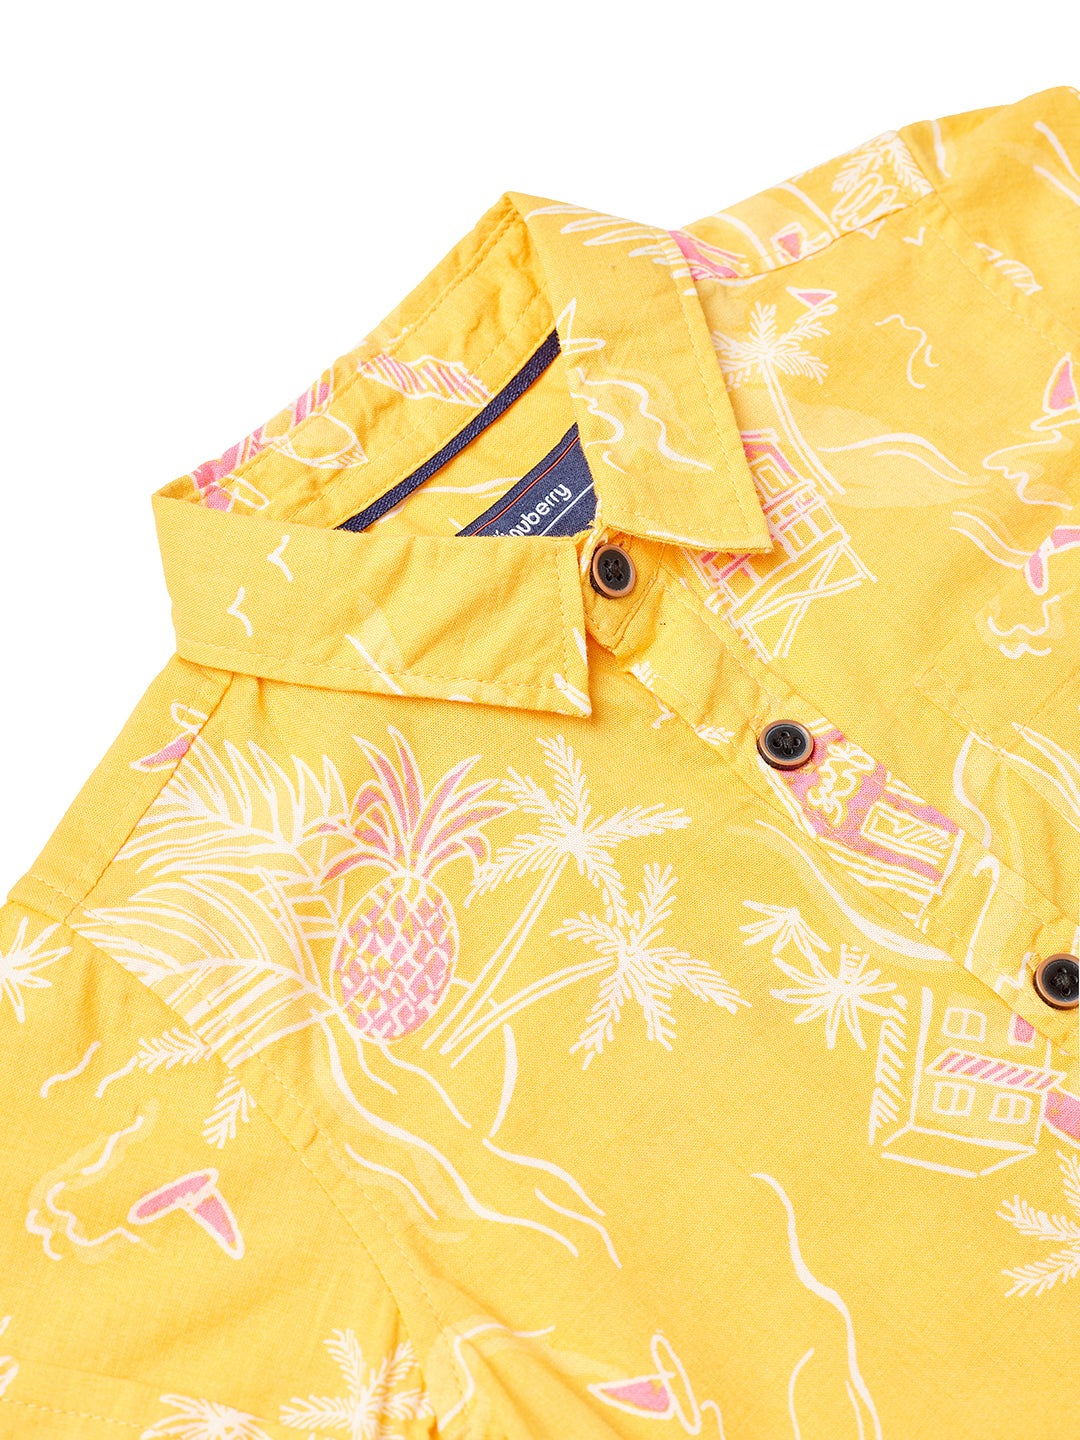 Nuberry Boys Shirt Half Sleeve - Yellow Full Printed